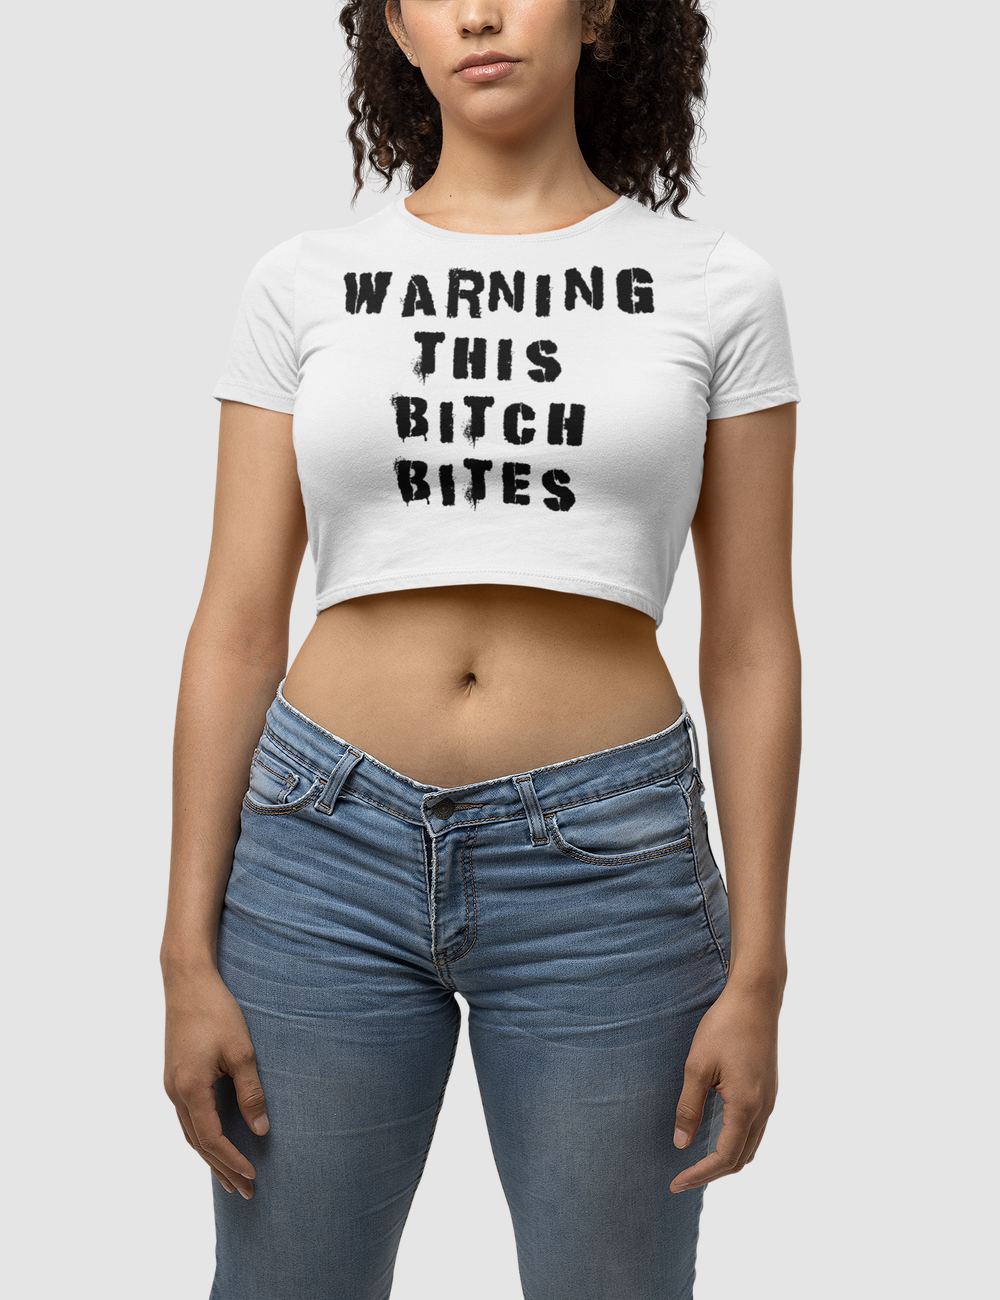 Warning: This Bitch Bites Women's Fitted Crop Top T-Shirt OniTakai